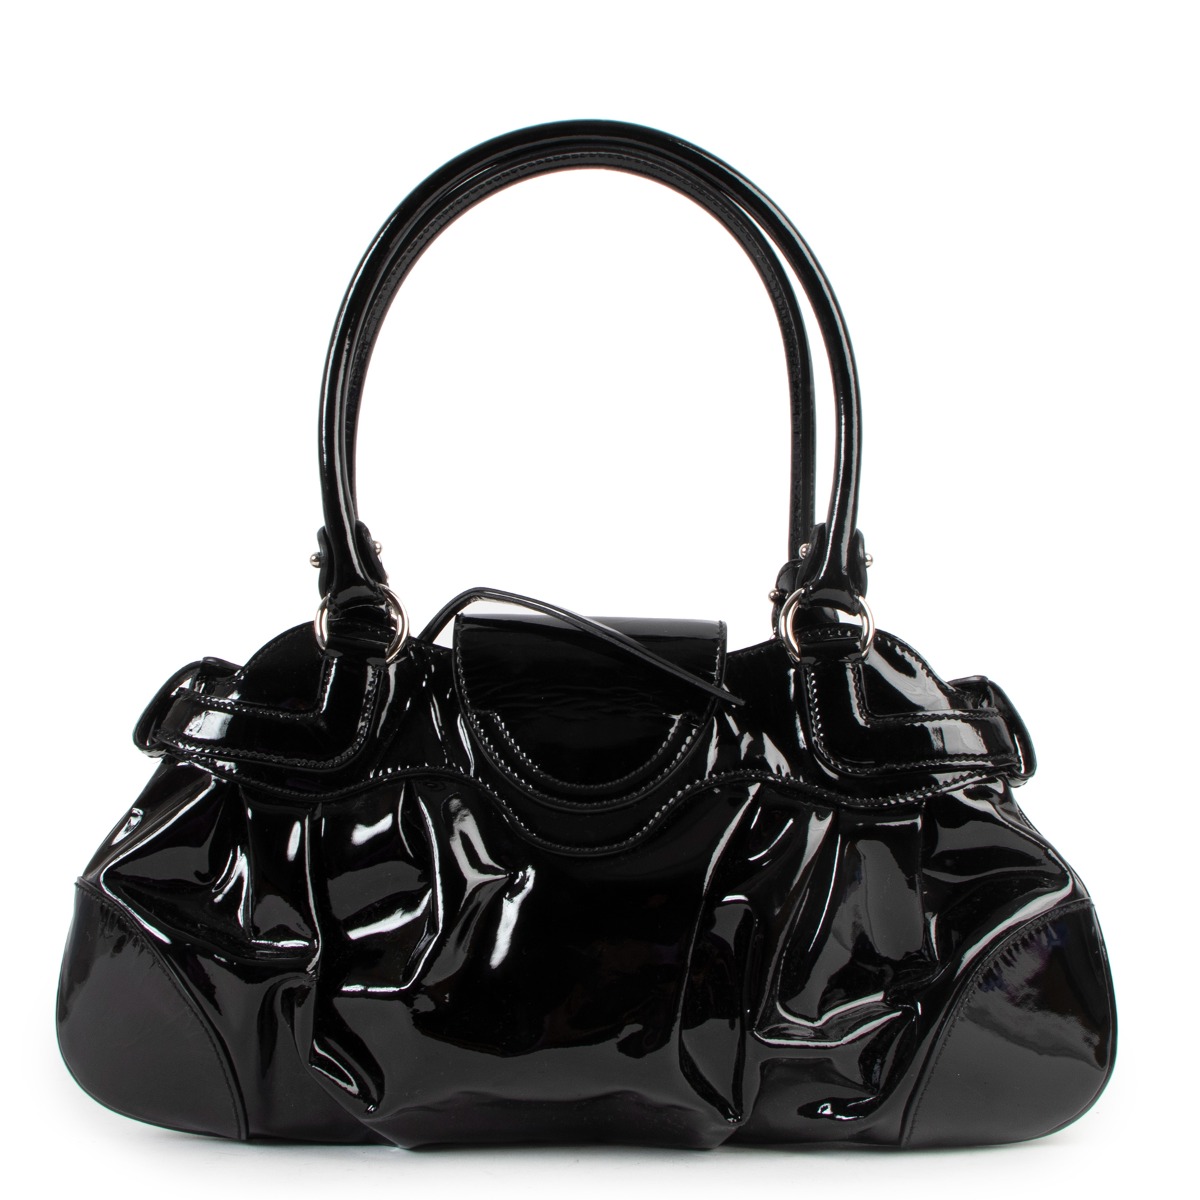 Salvatore Ferragamo Shoulder Bag FZ-21 7803 Patent leather Black